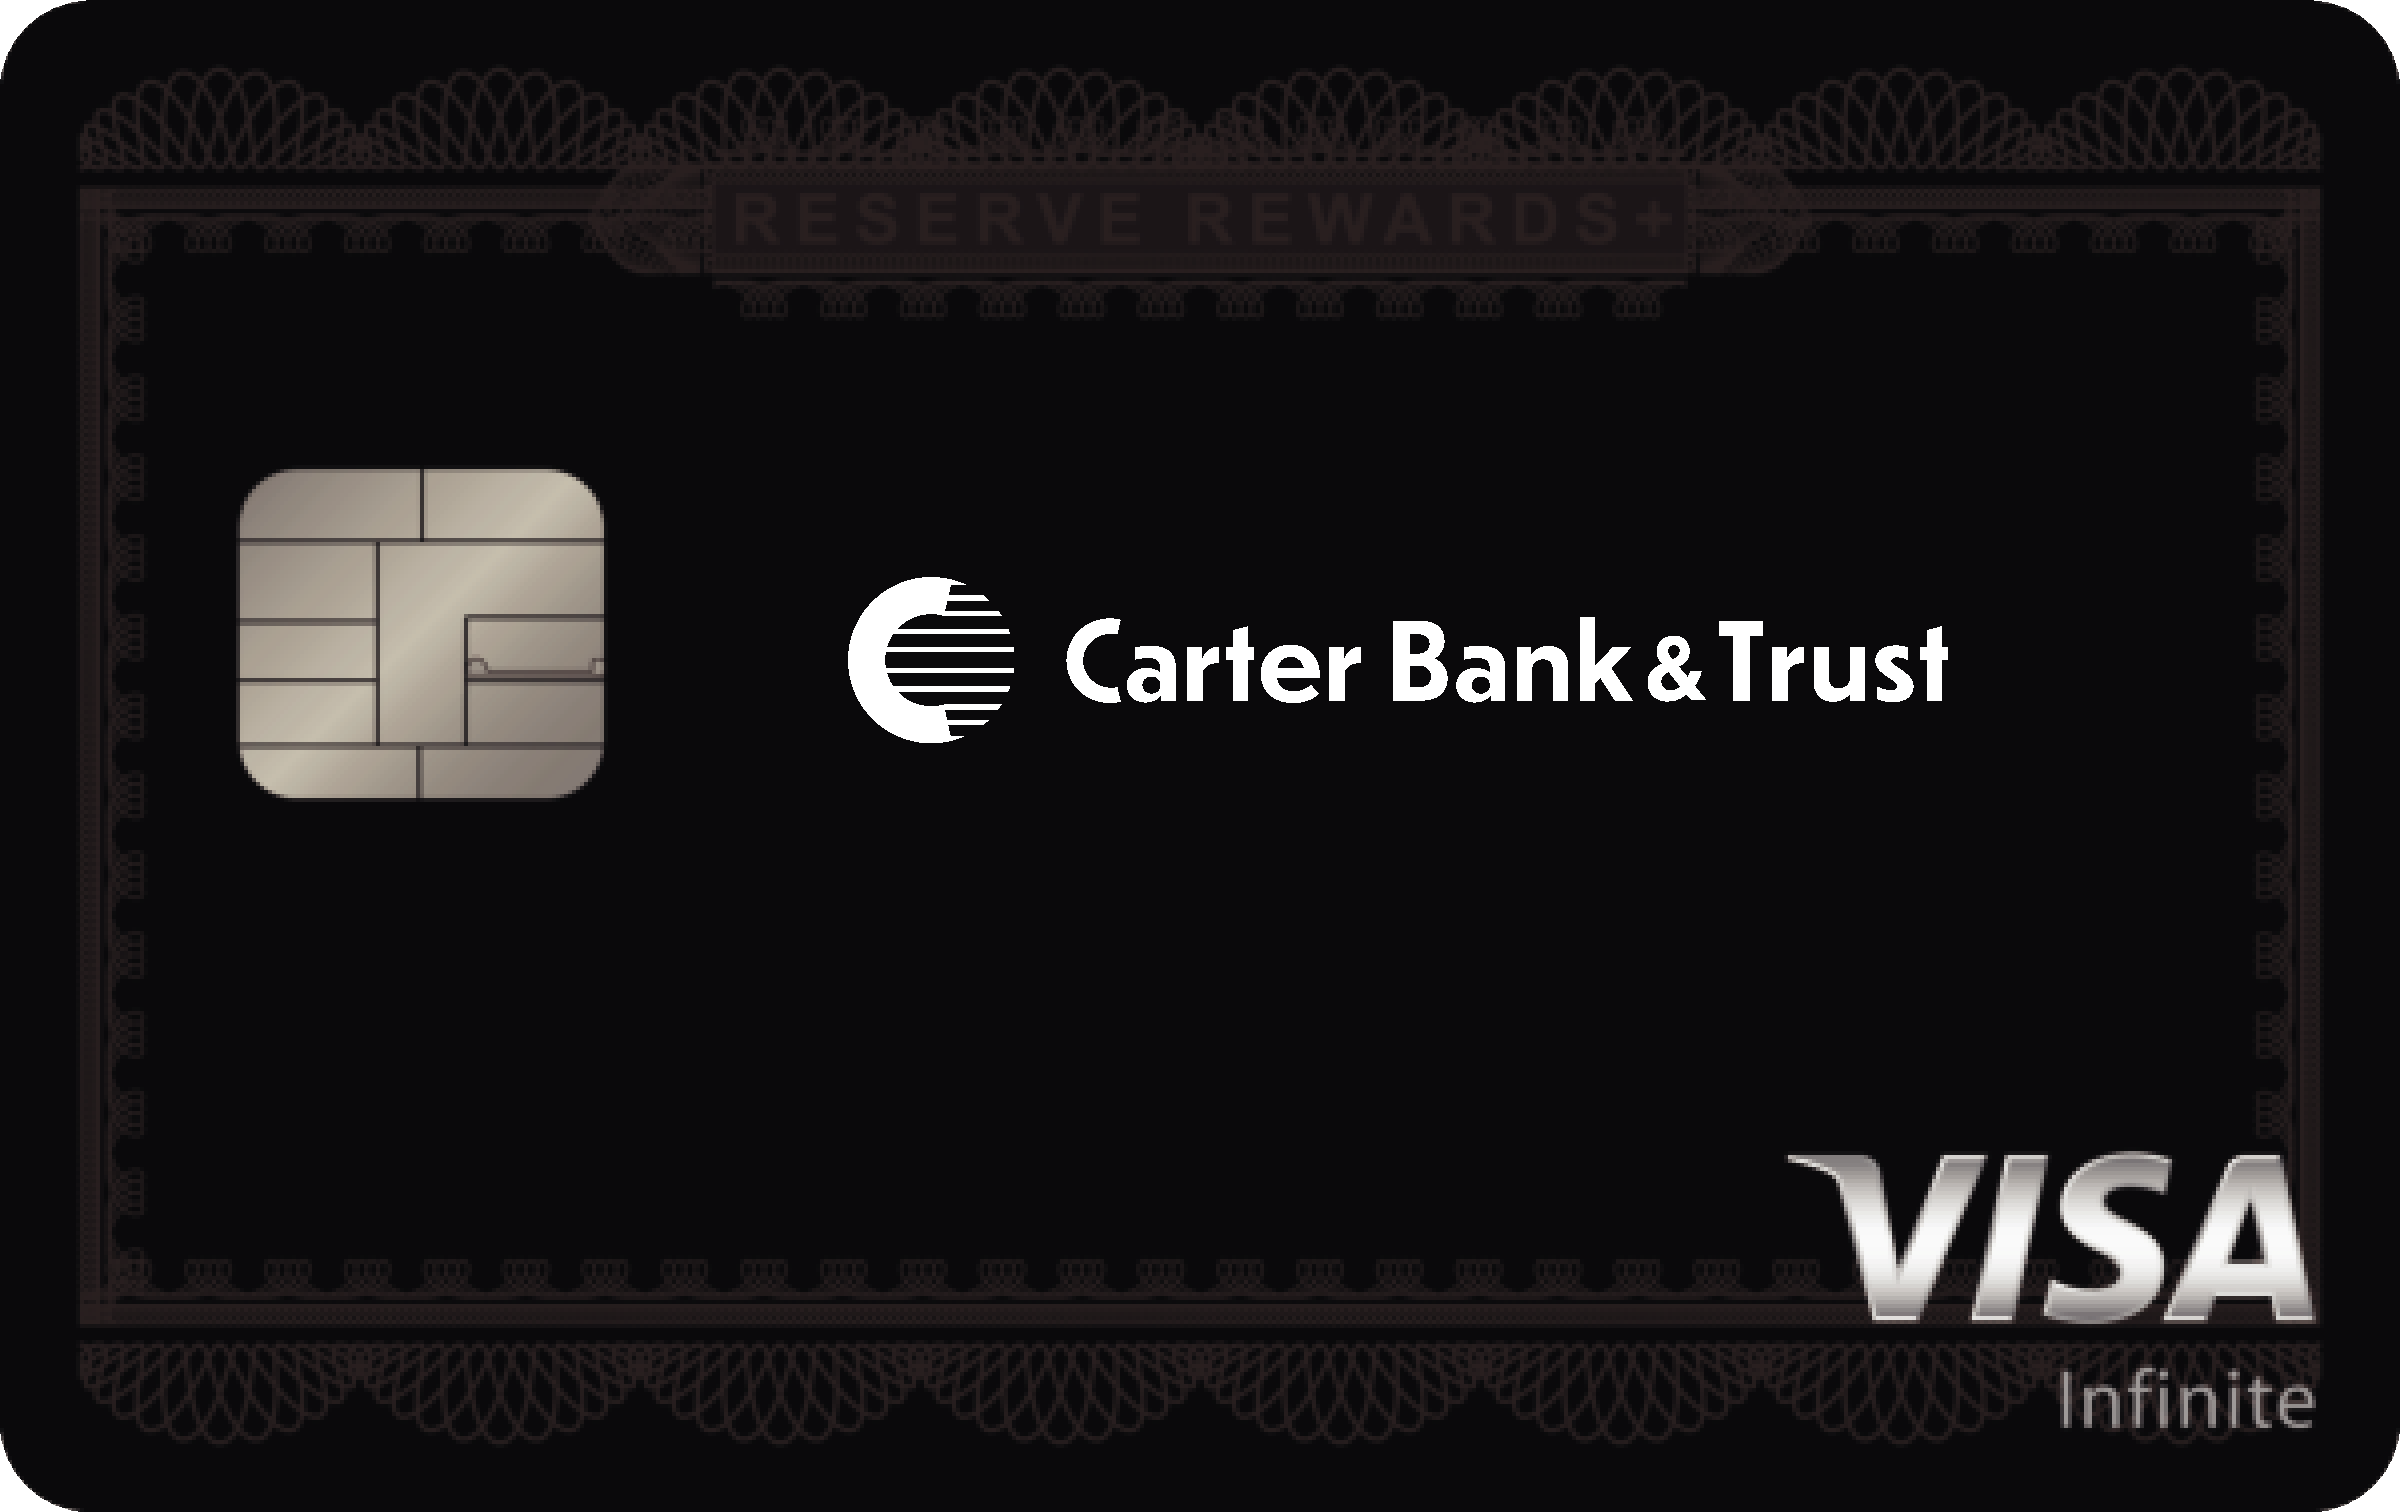 Carter Bank & Trust Reserve Rewards+ Card